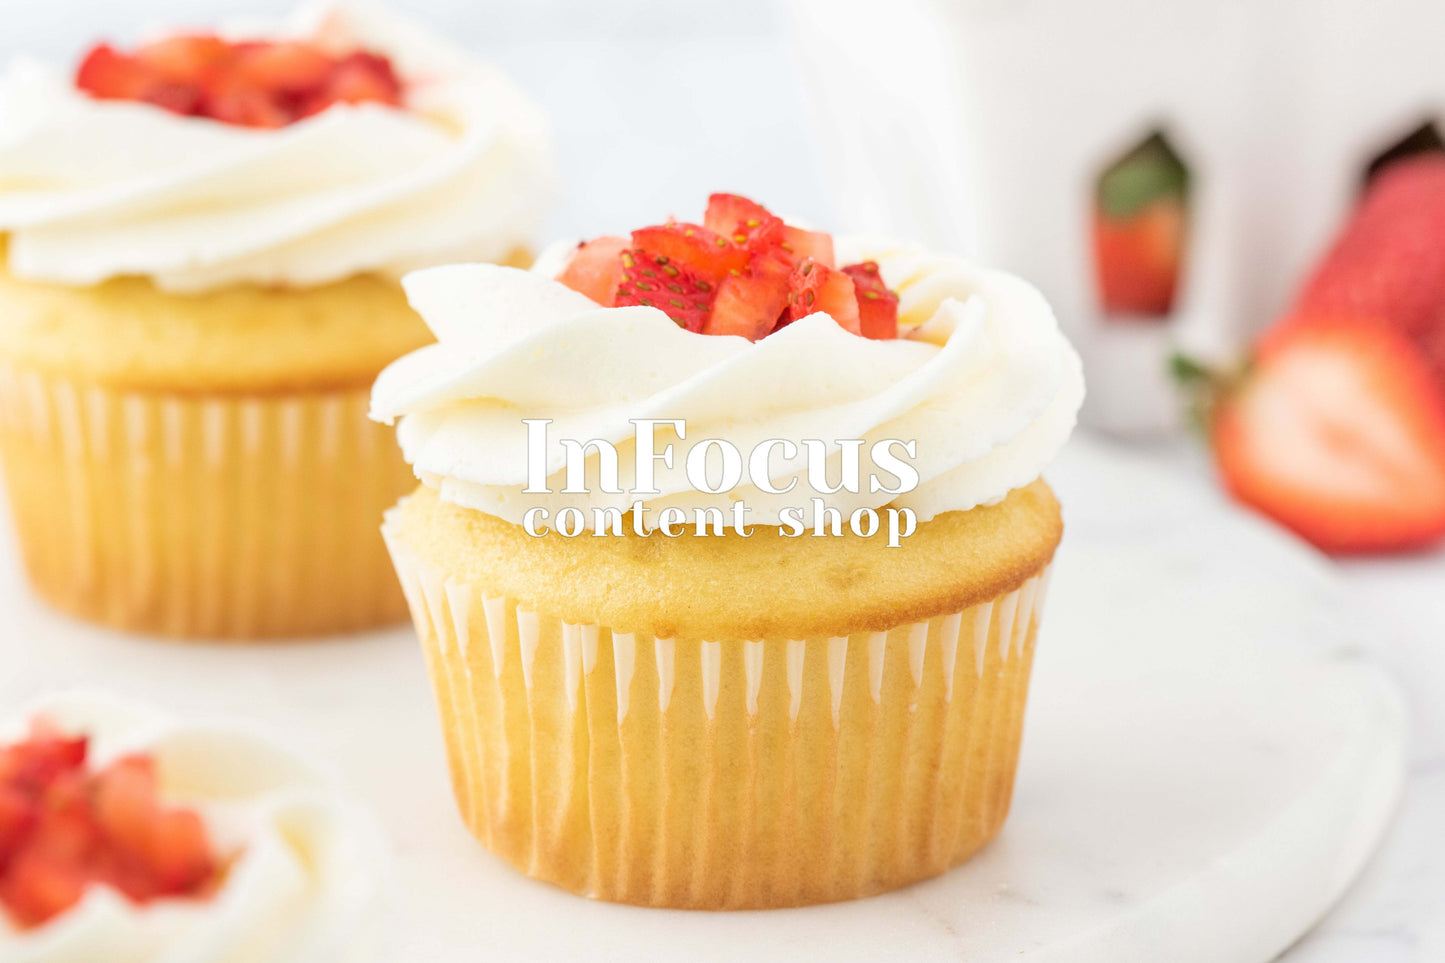 Strawberry Shortcake Cupcakes- Semi-Exclusive Set 1